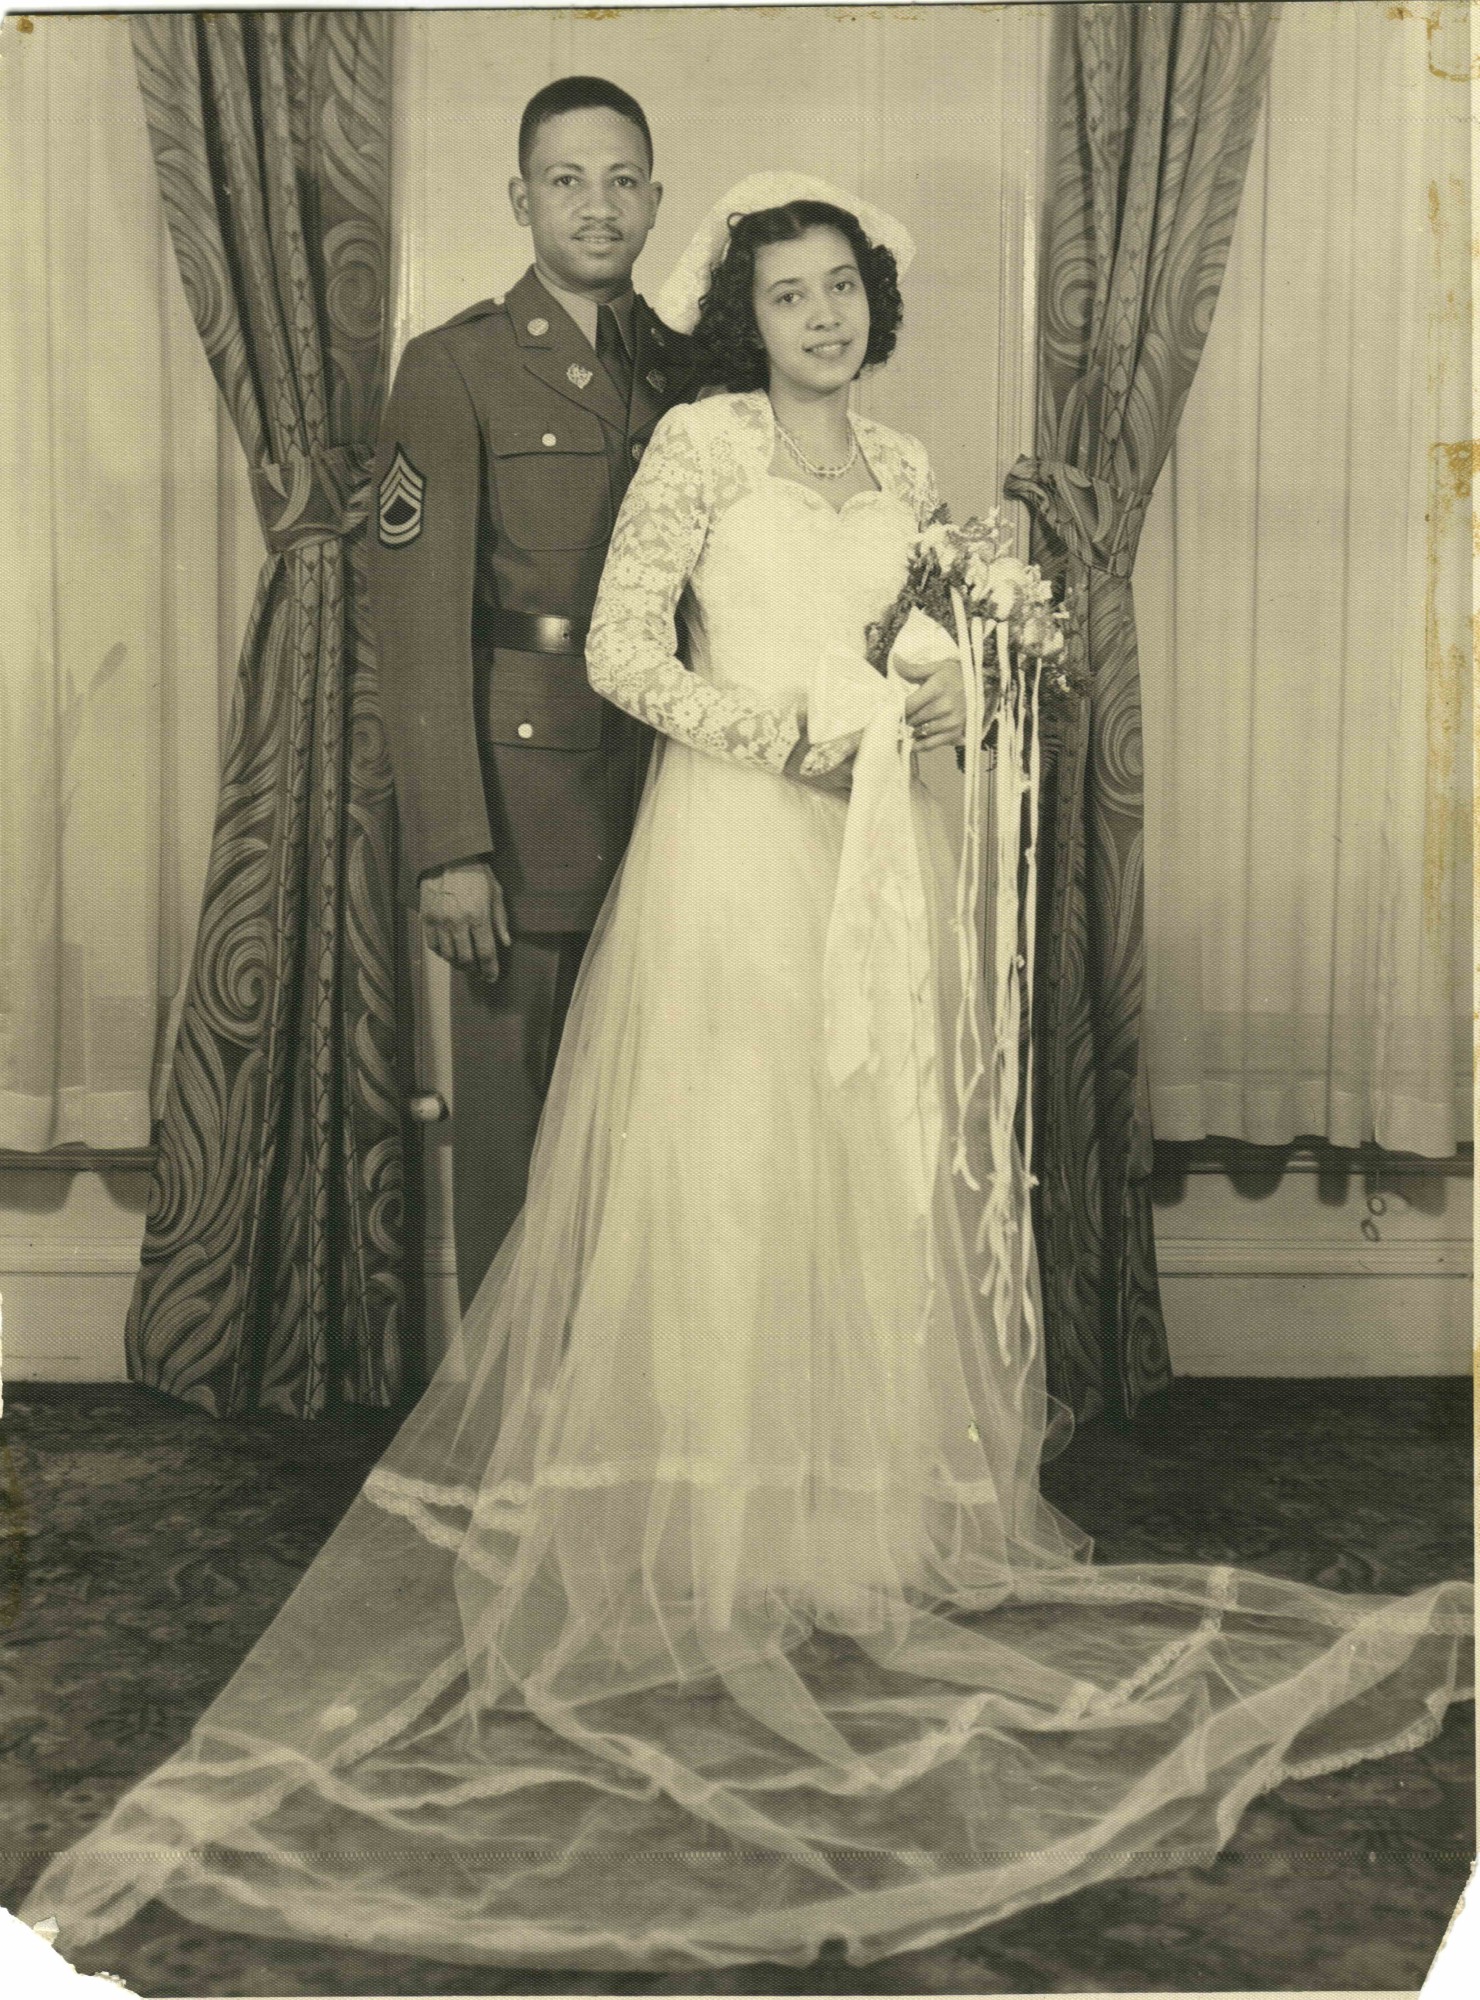 B&W photo of man in uniform and woman in wedding dress